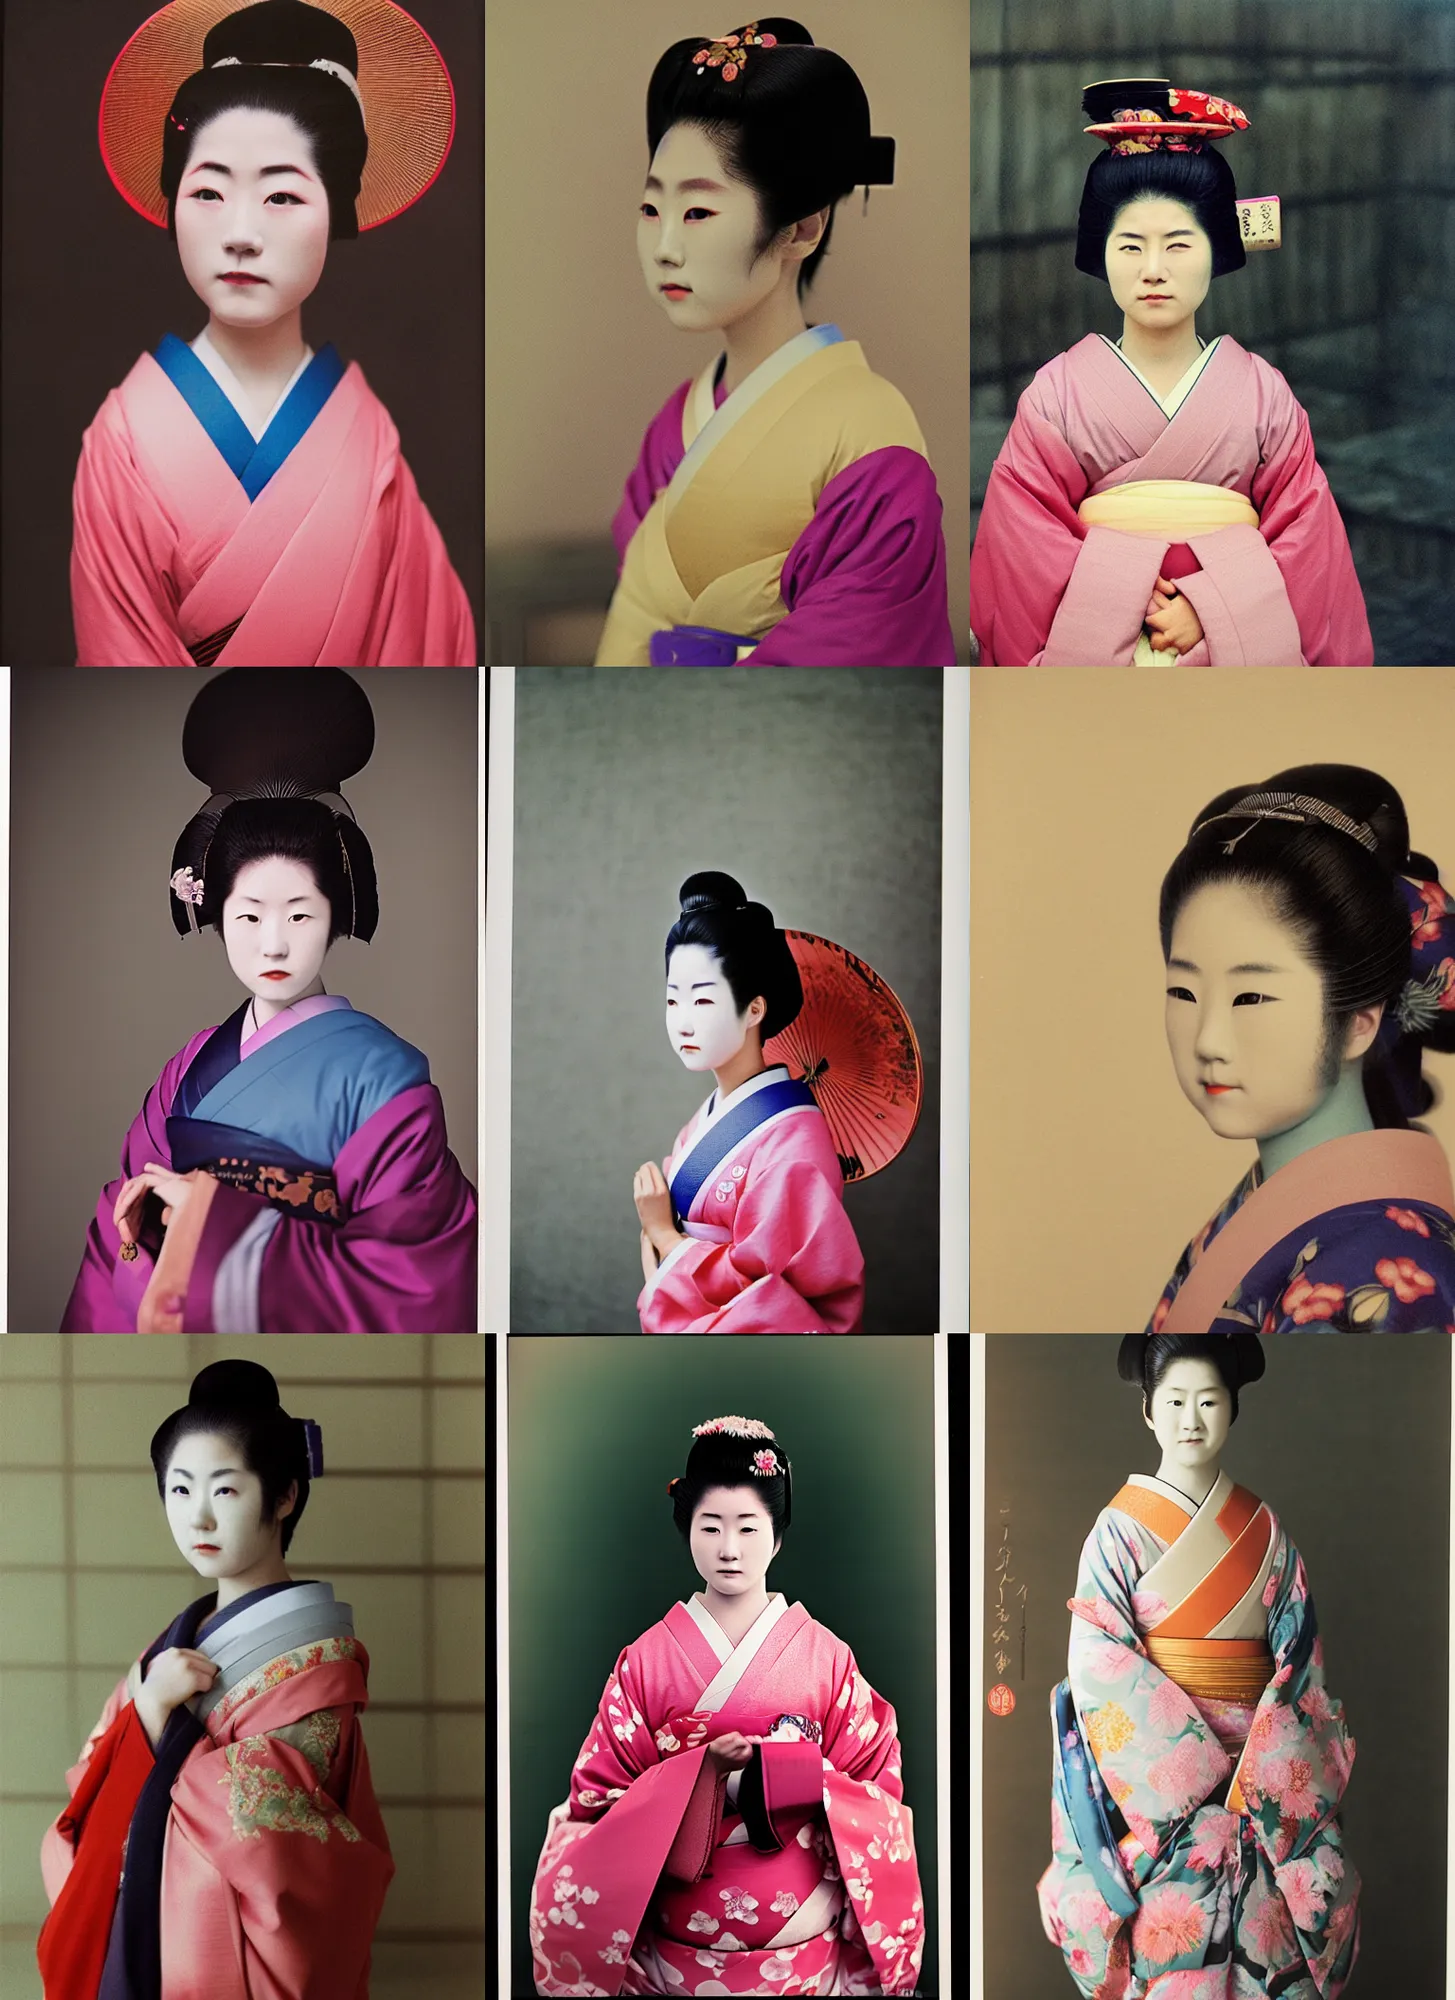 Prompt: Portrait Photograph of a Japanese Geisha FujiChrome Sensia 200